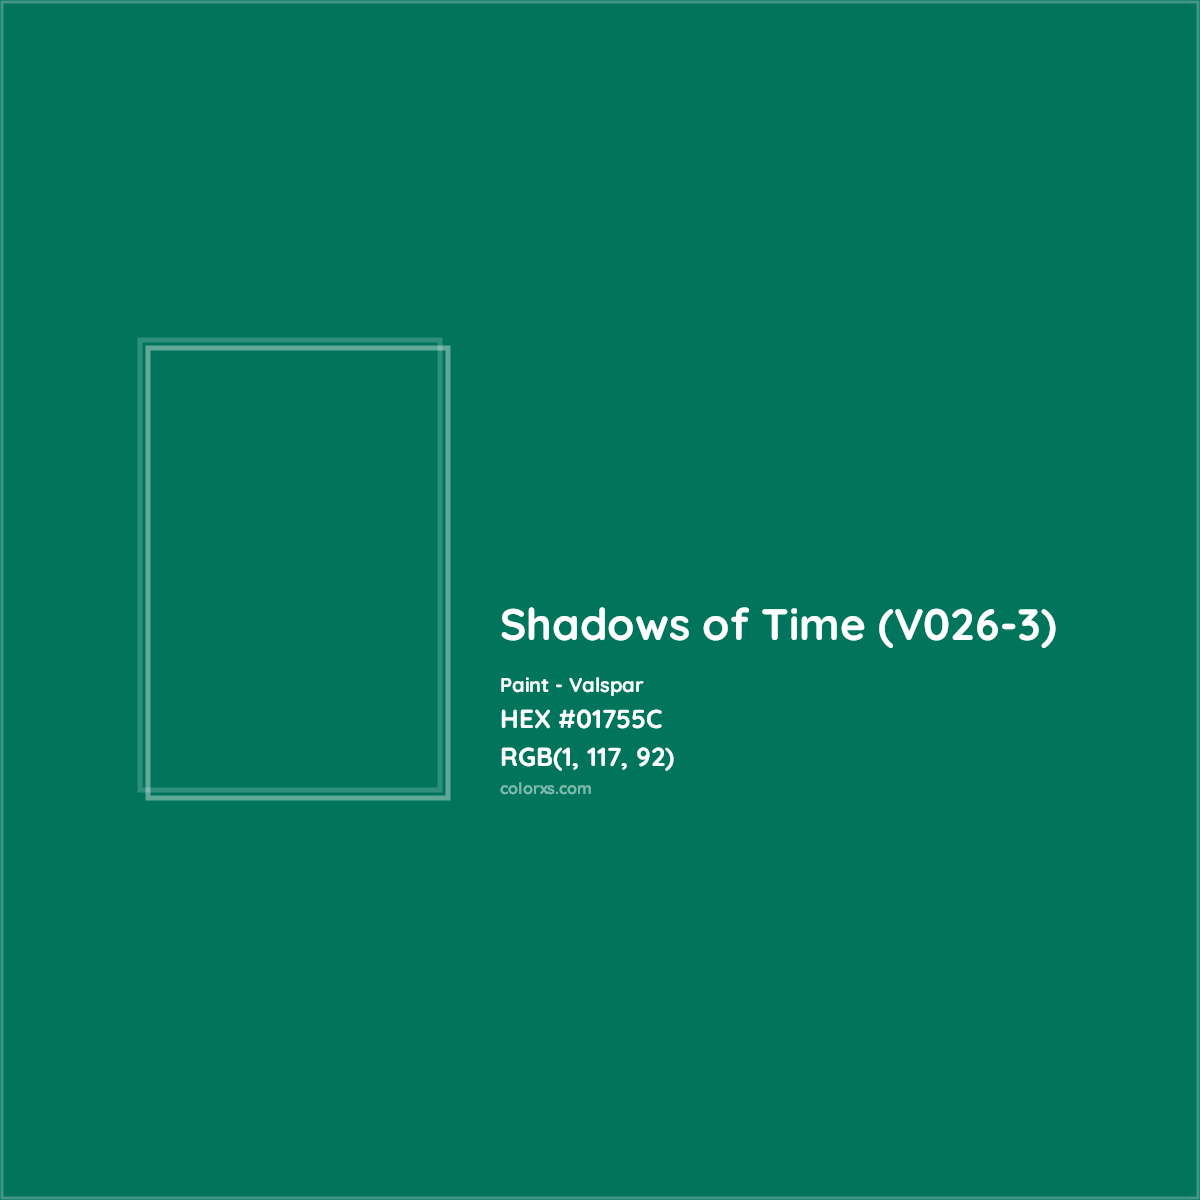 HEX #01755C Shadows of Time (V026-3) Paint Valspar - Color Code